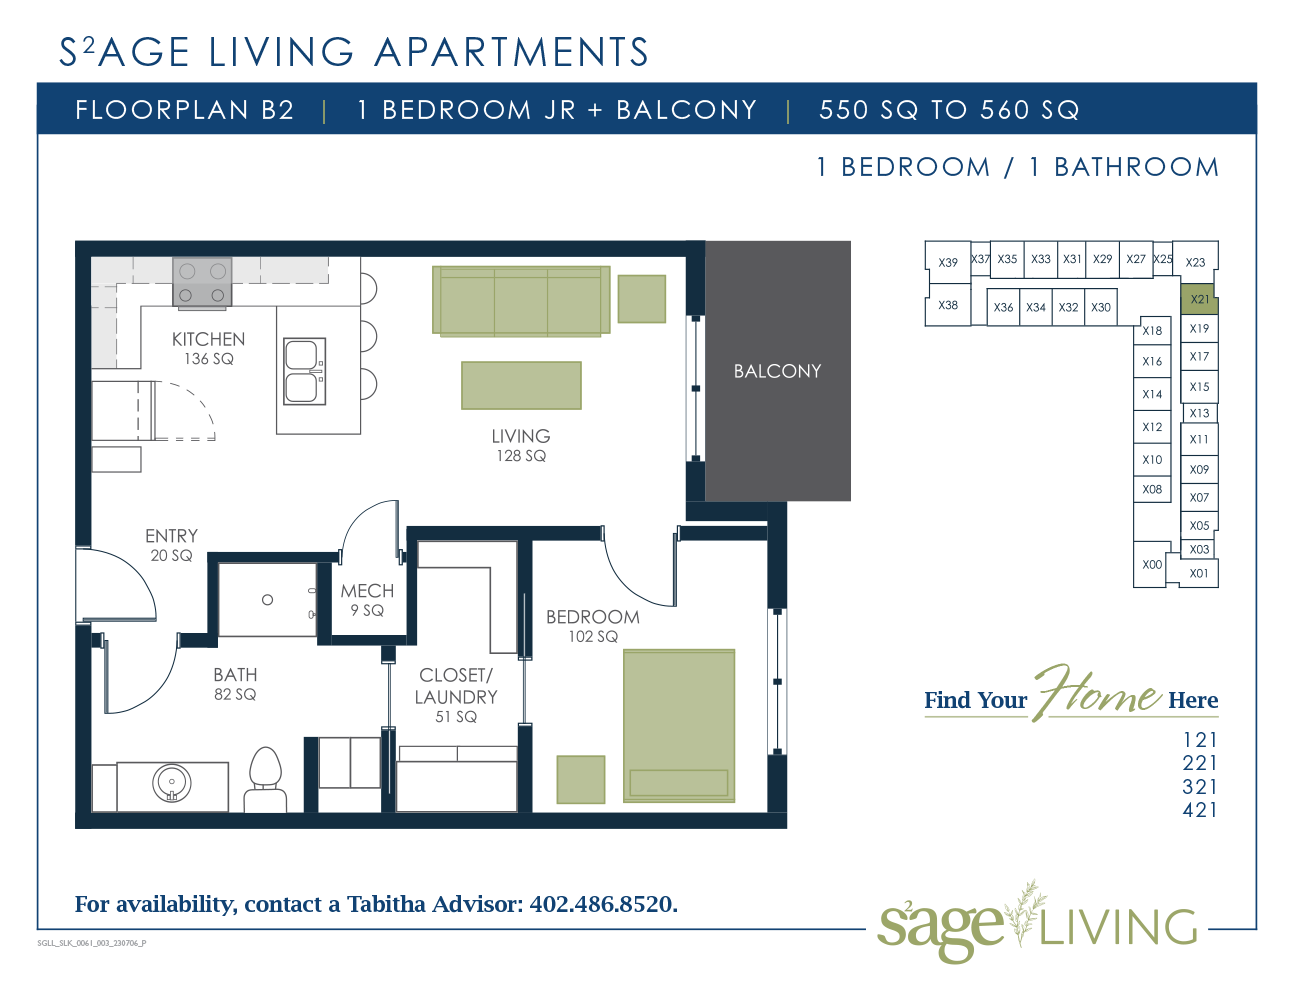 S2age Living Floor Plan, Apartment B2